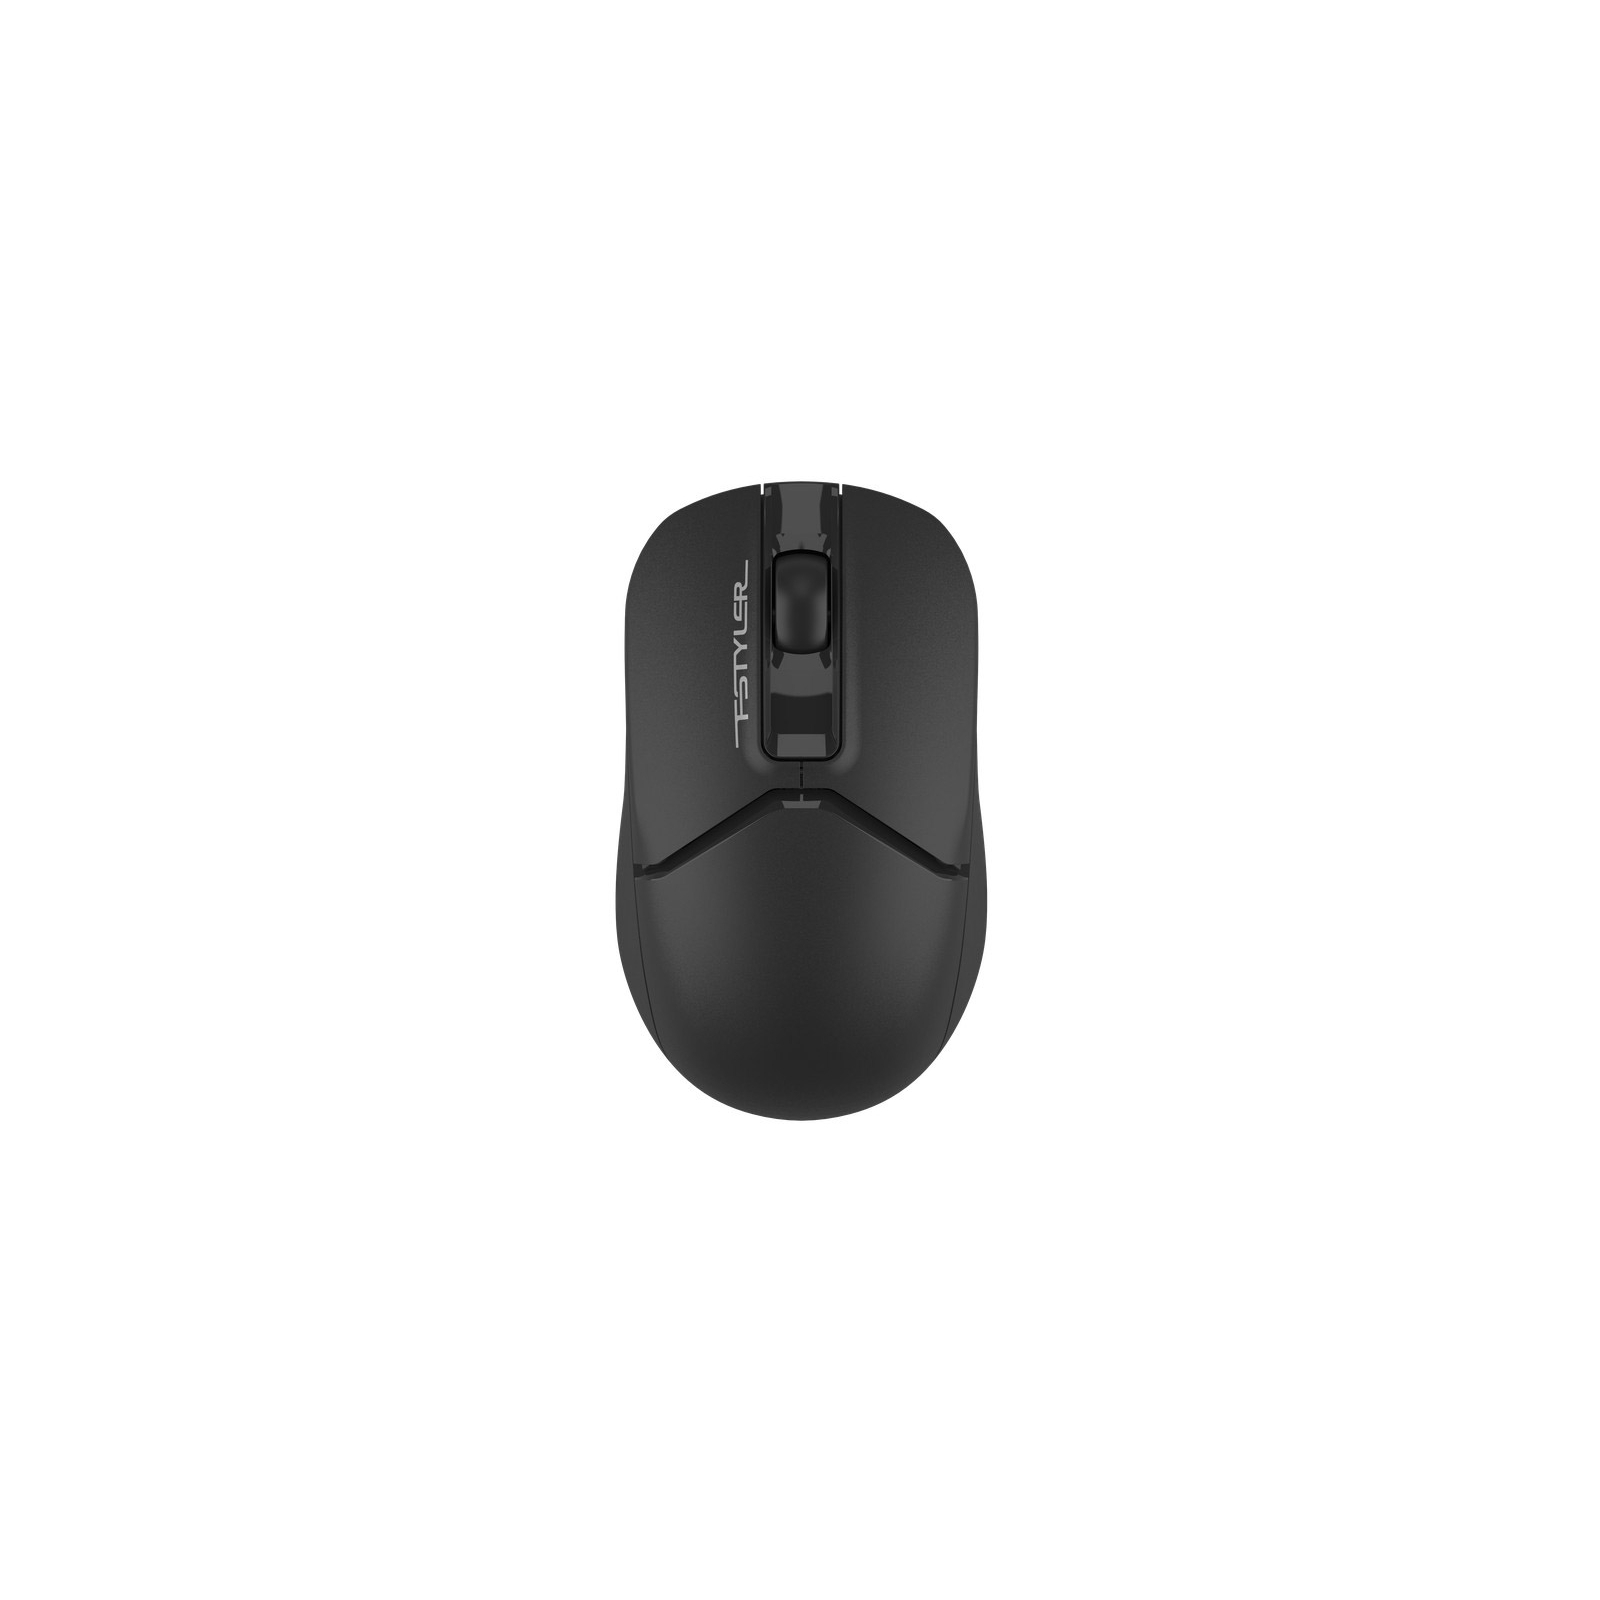 Мышка A4Tech FB12S Wireless/Bluetooth Black (FB12S Black)